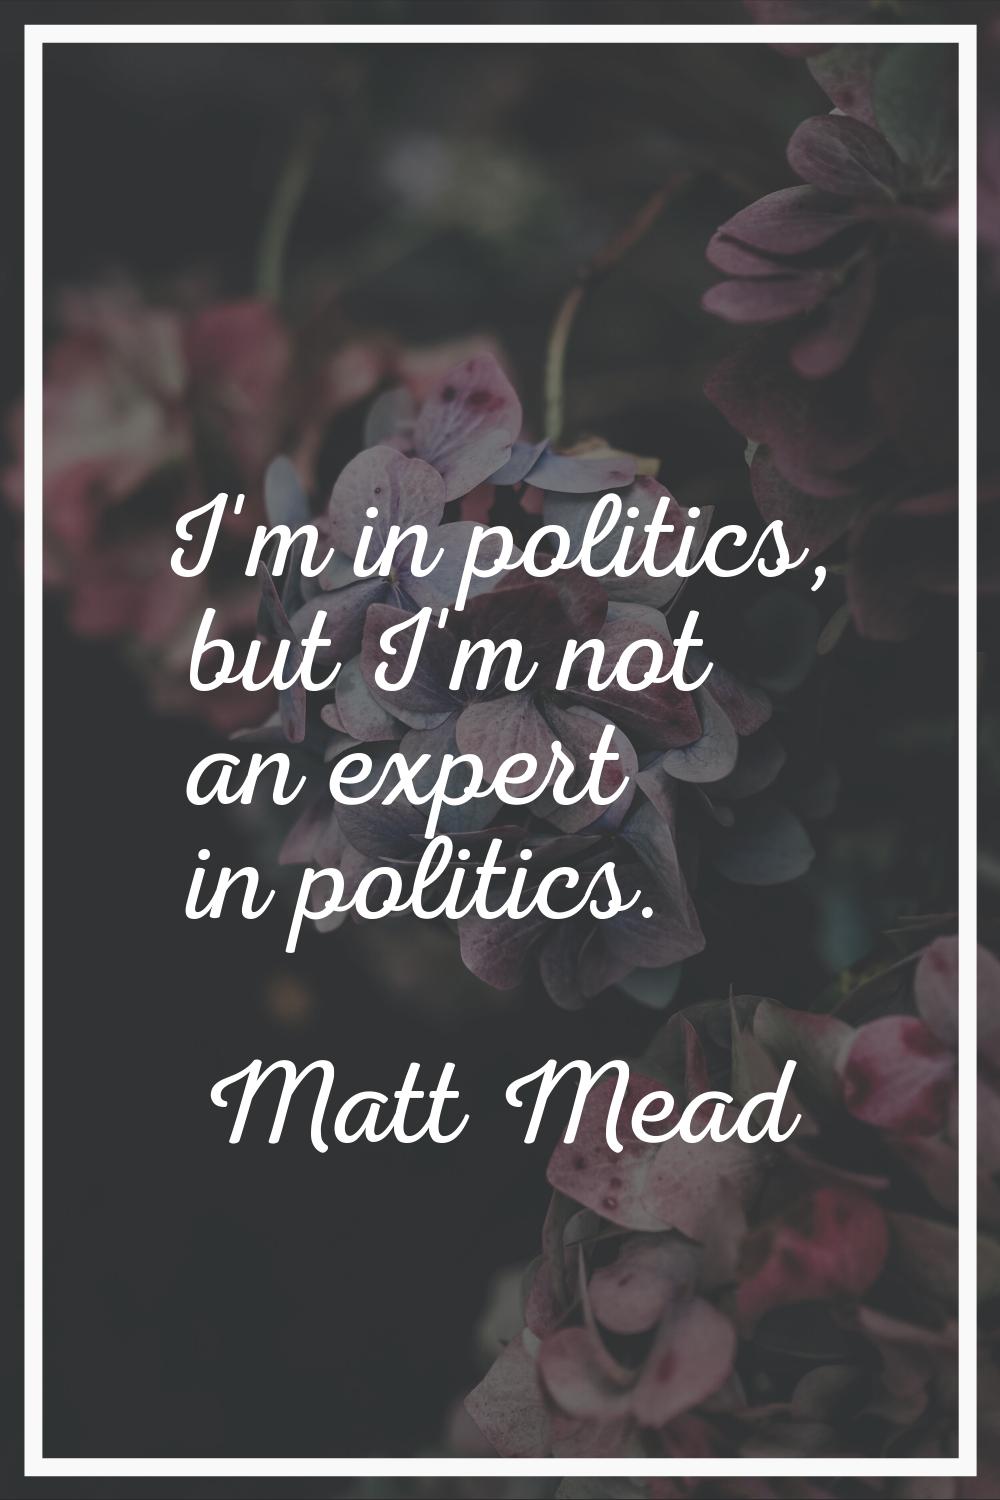 I'm in politics, but I'm not an expert in politics.